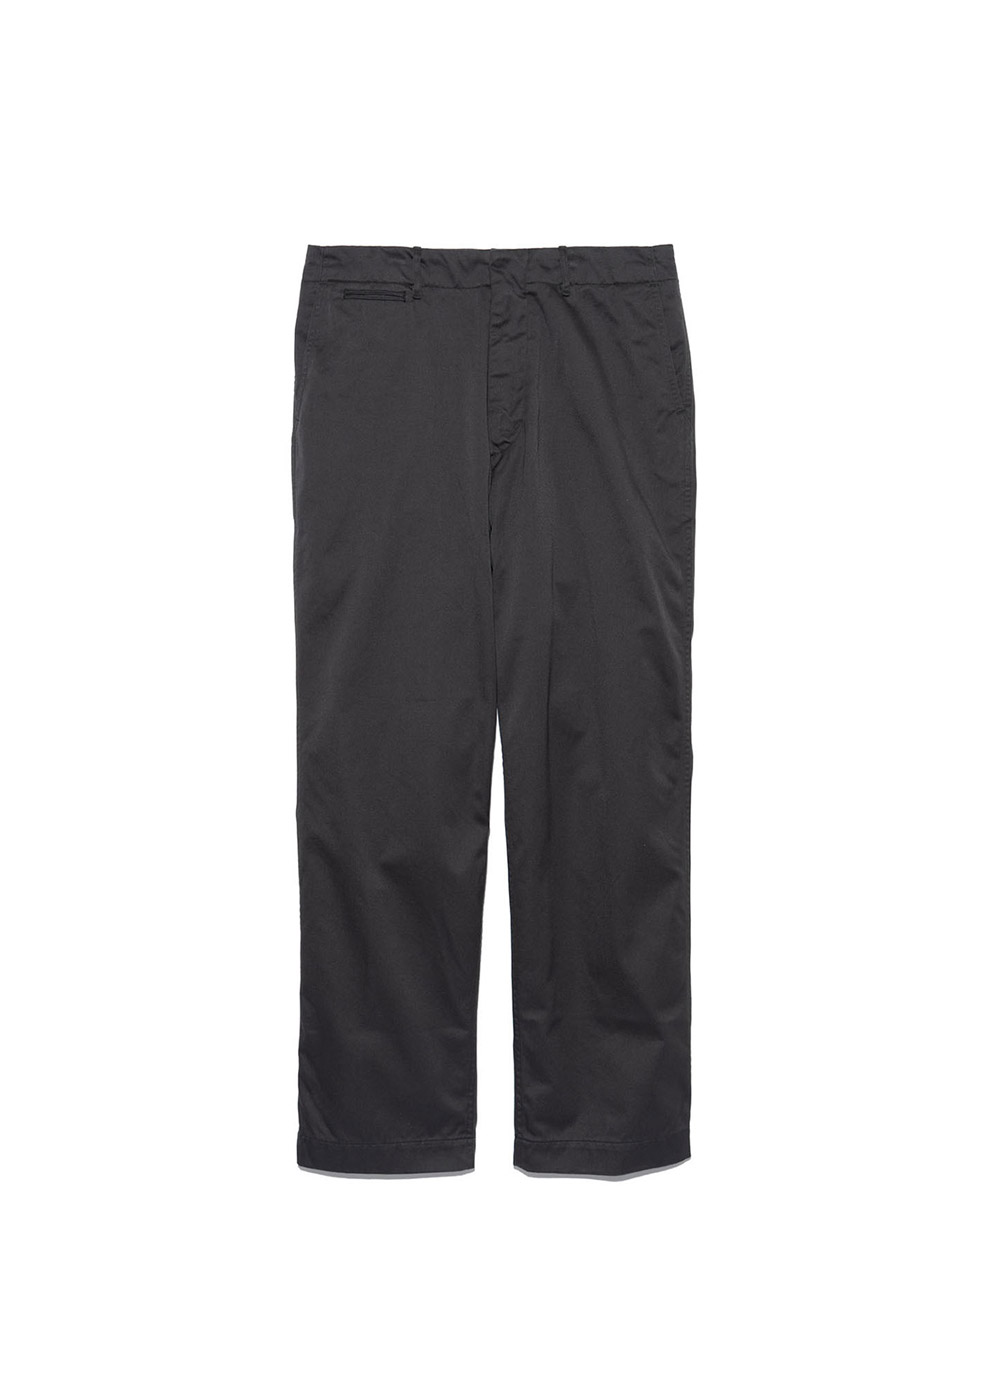 Wide Chino Pants (Gray)